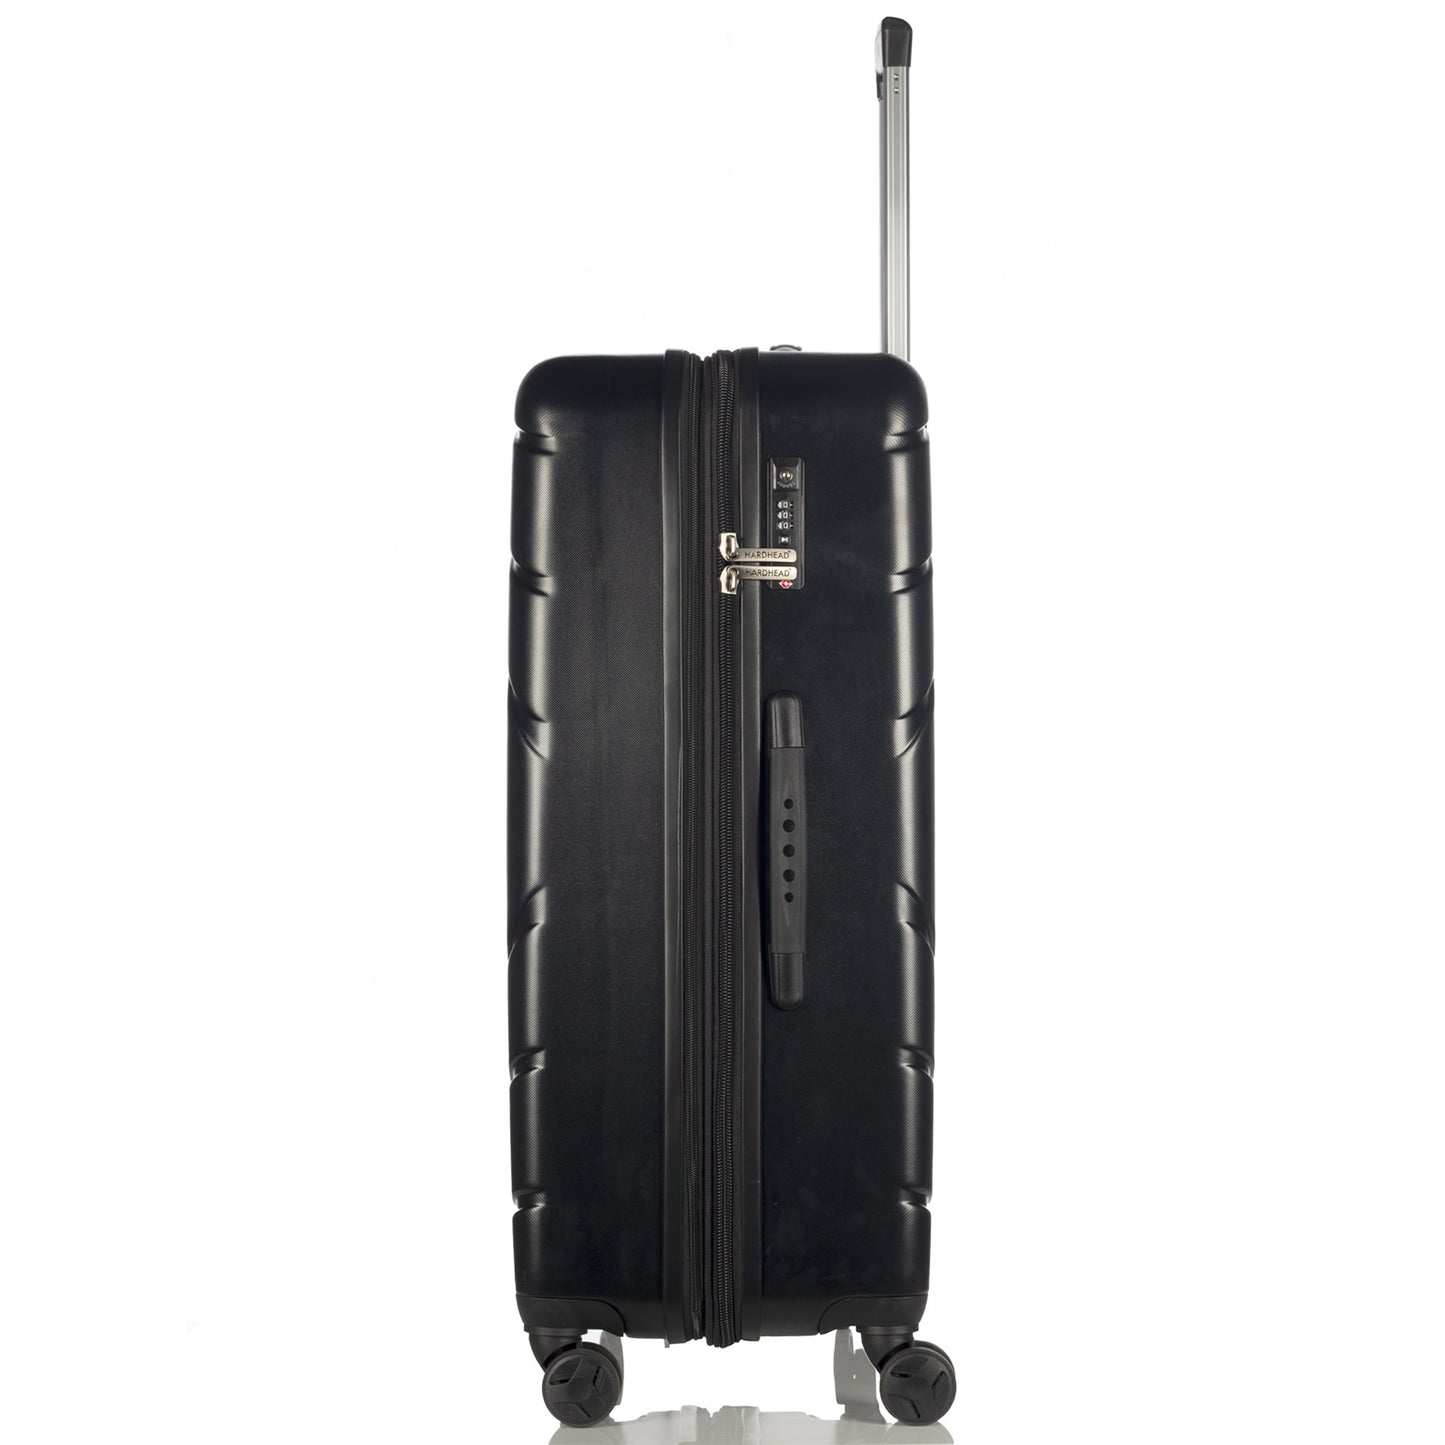 Hardhead Luggage 3 pieces set (20/24/28") Eco Hardside Travel Suitcase with 4 360 Wheels Lock Included, Black